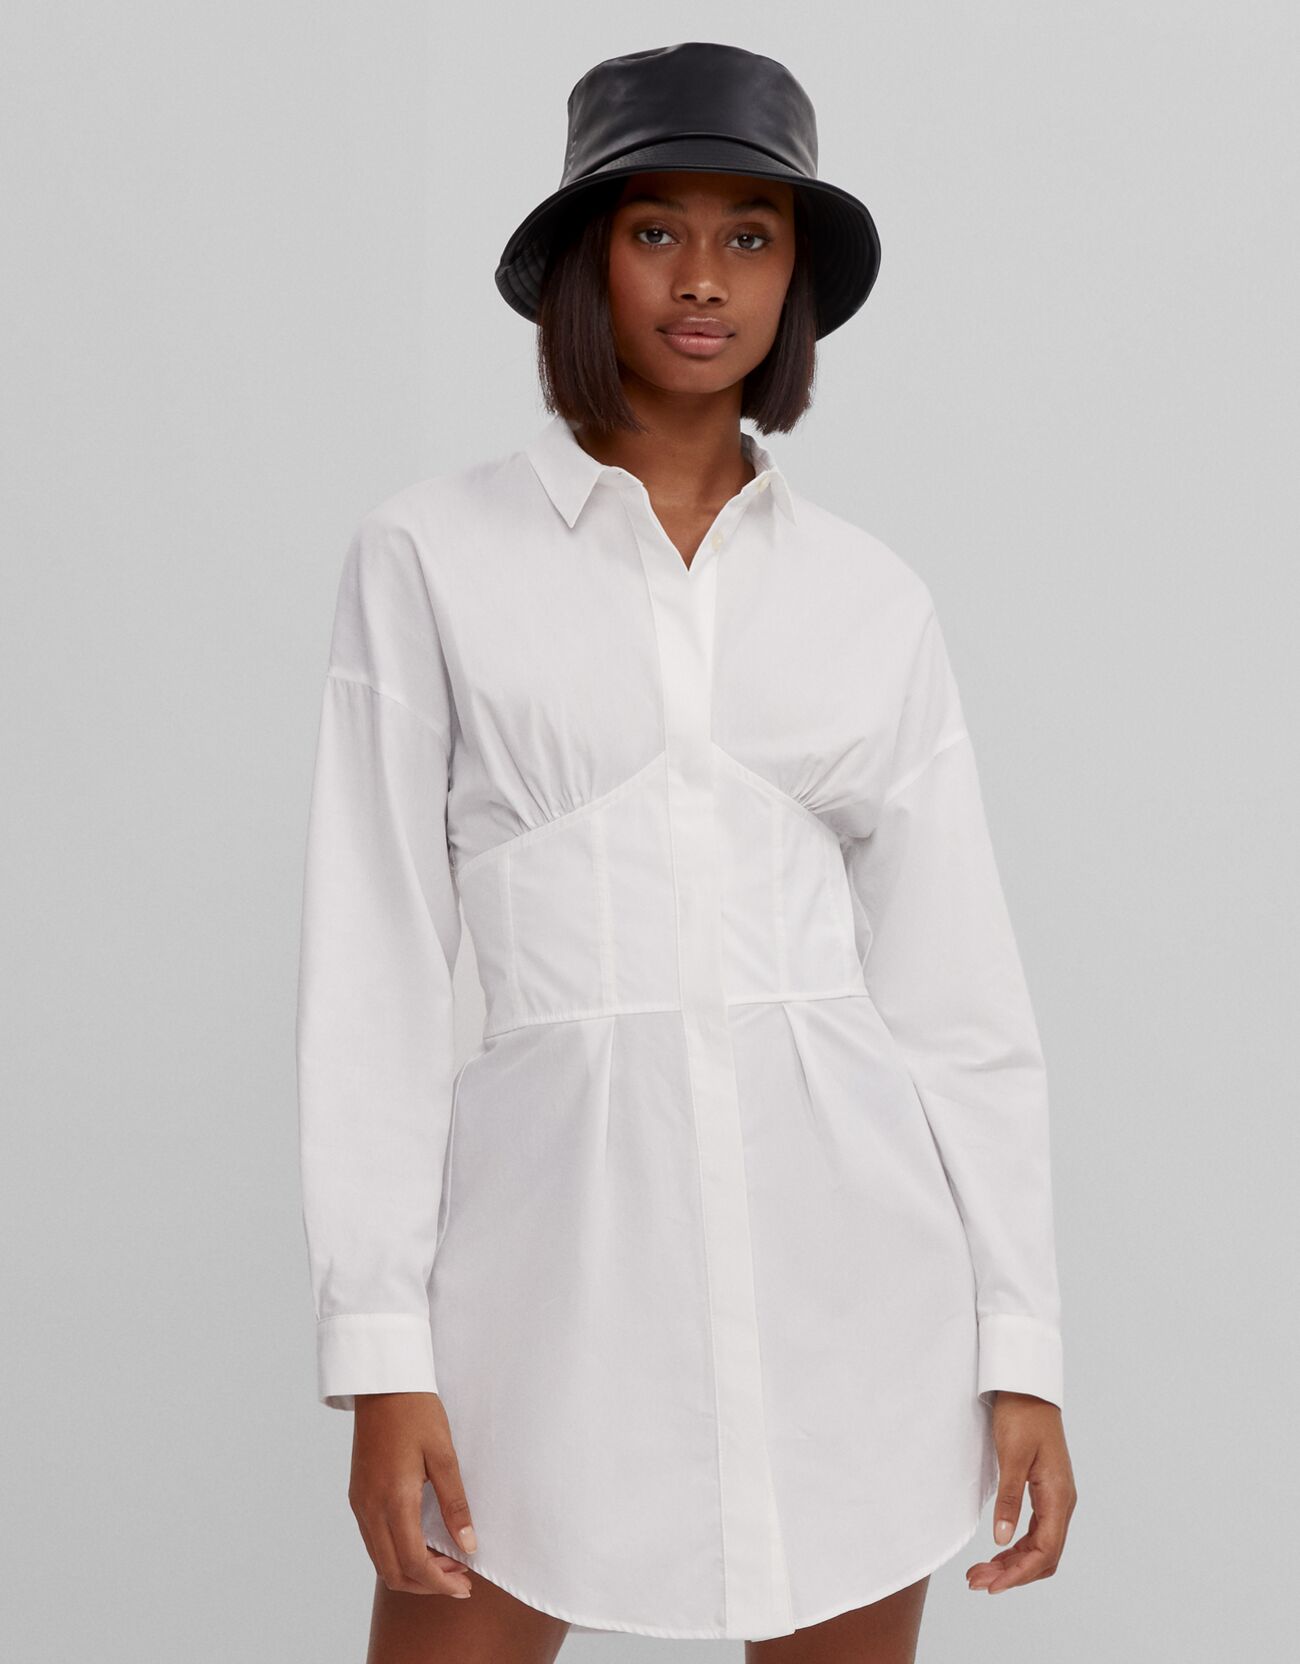 plaid dress with white shirt